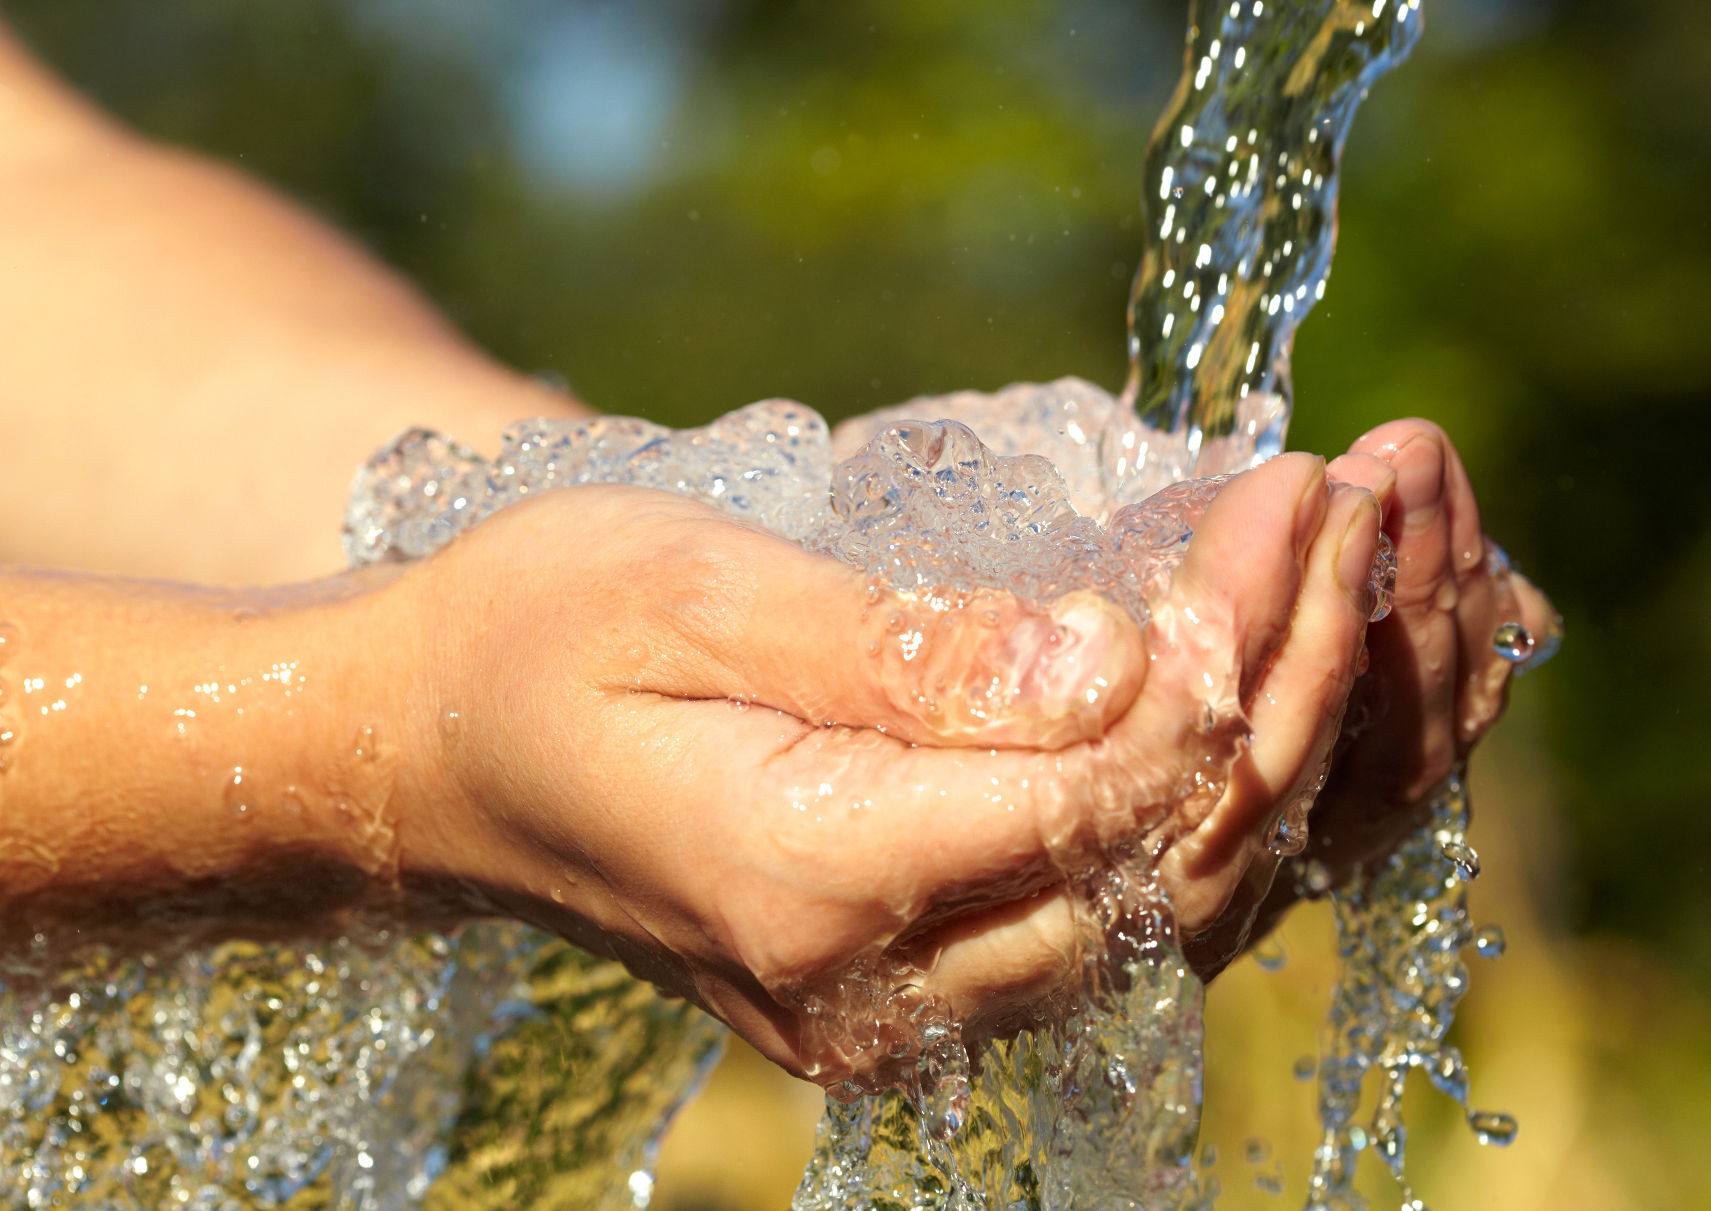 Detox - washing hands in running water